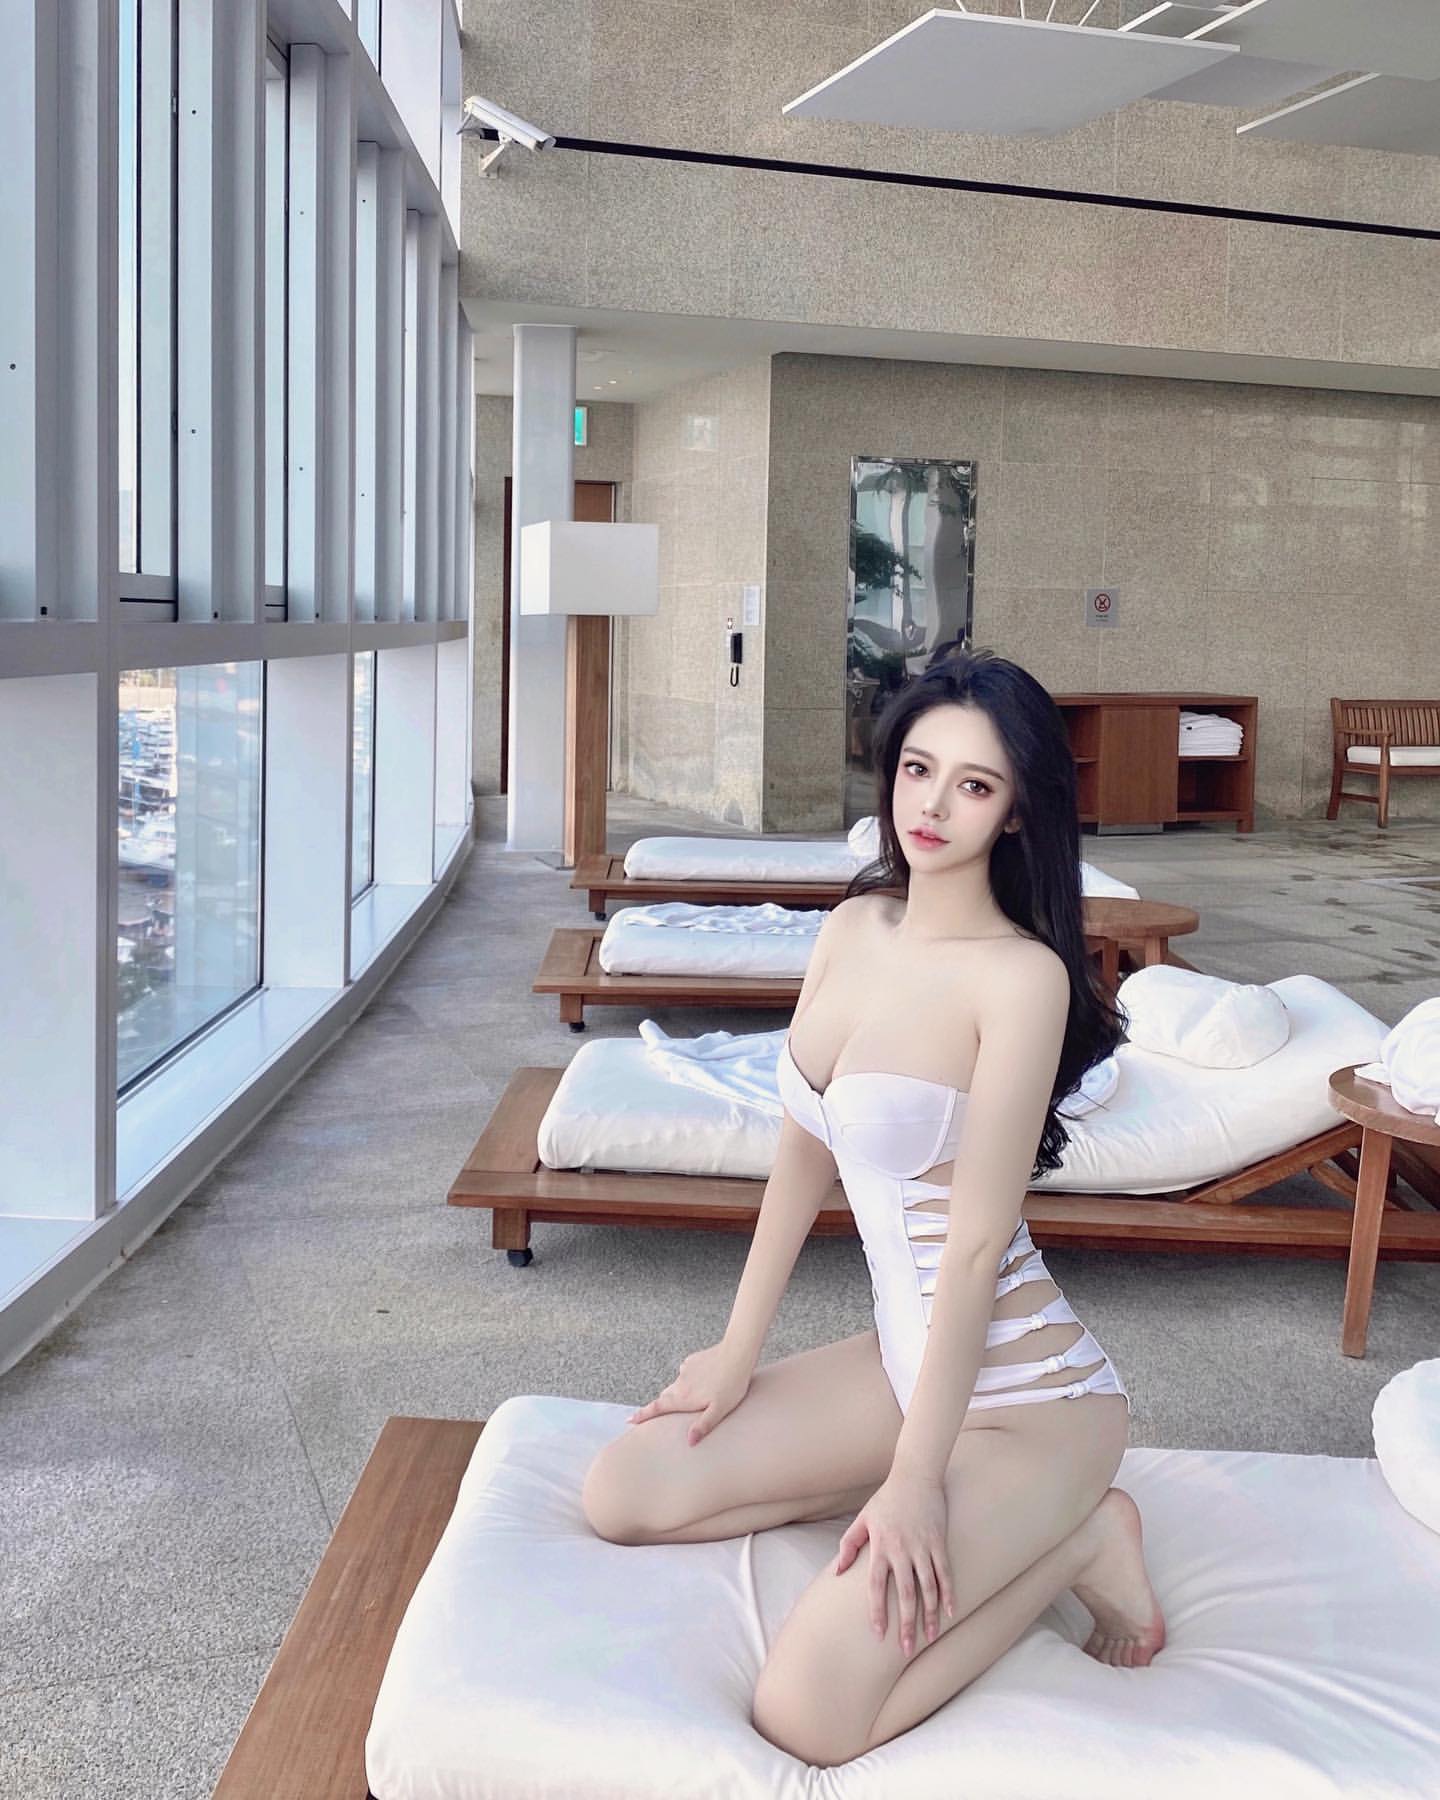 Instagram Bjaewww Bjaewww Jaewoneey Jaewoneey J 美女 正妹 아름다움 Beauty Cute Girls Photos From Instagram Weibo Etc